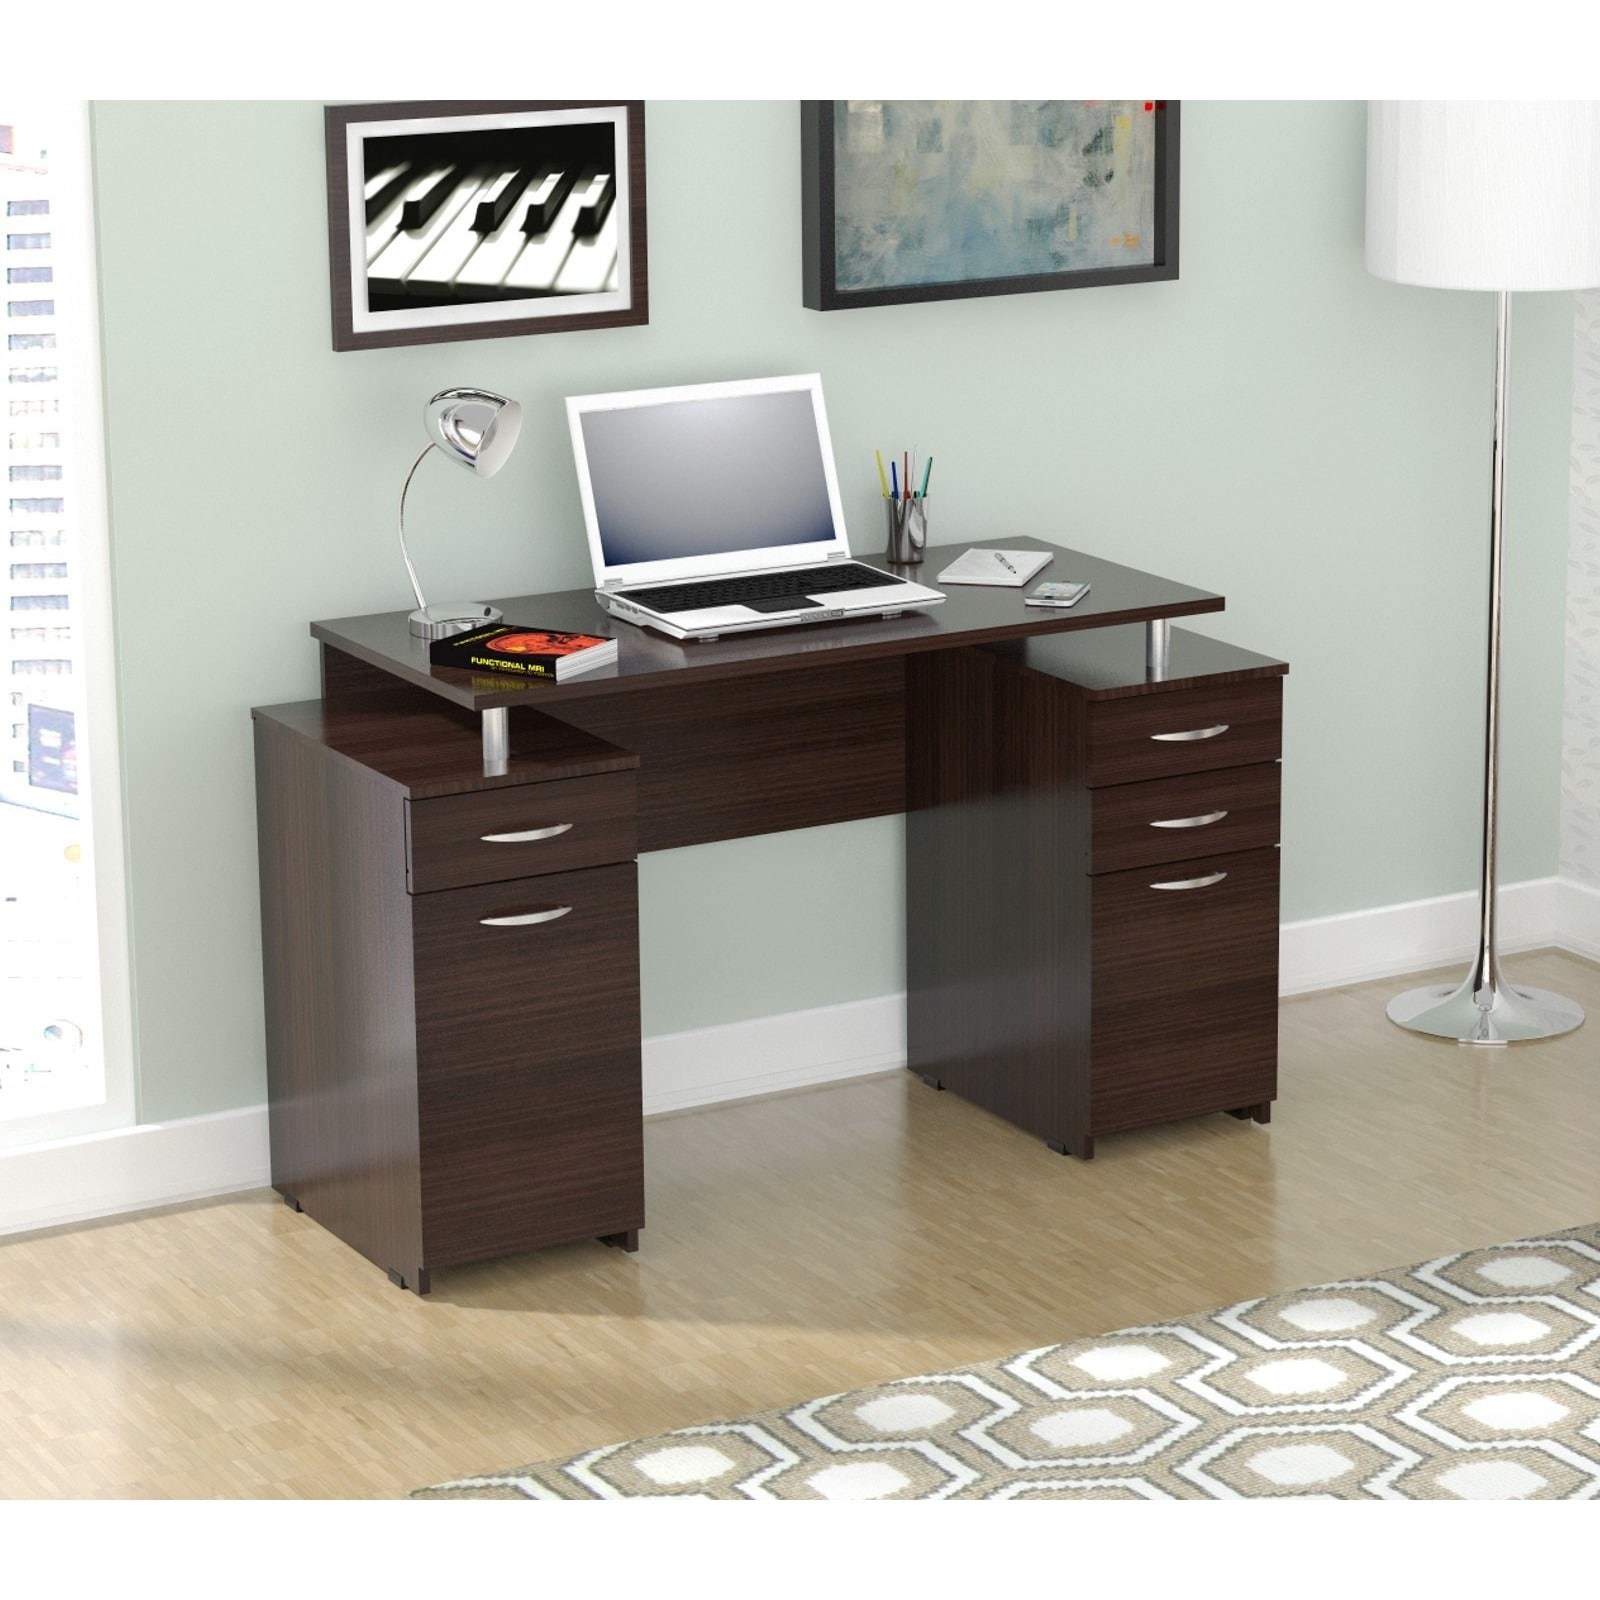 Shop Inval Executive Style Computer Desk Overstock 6234219